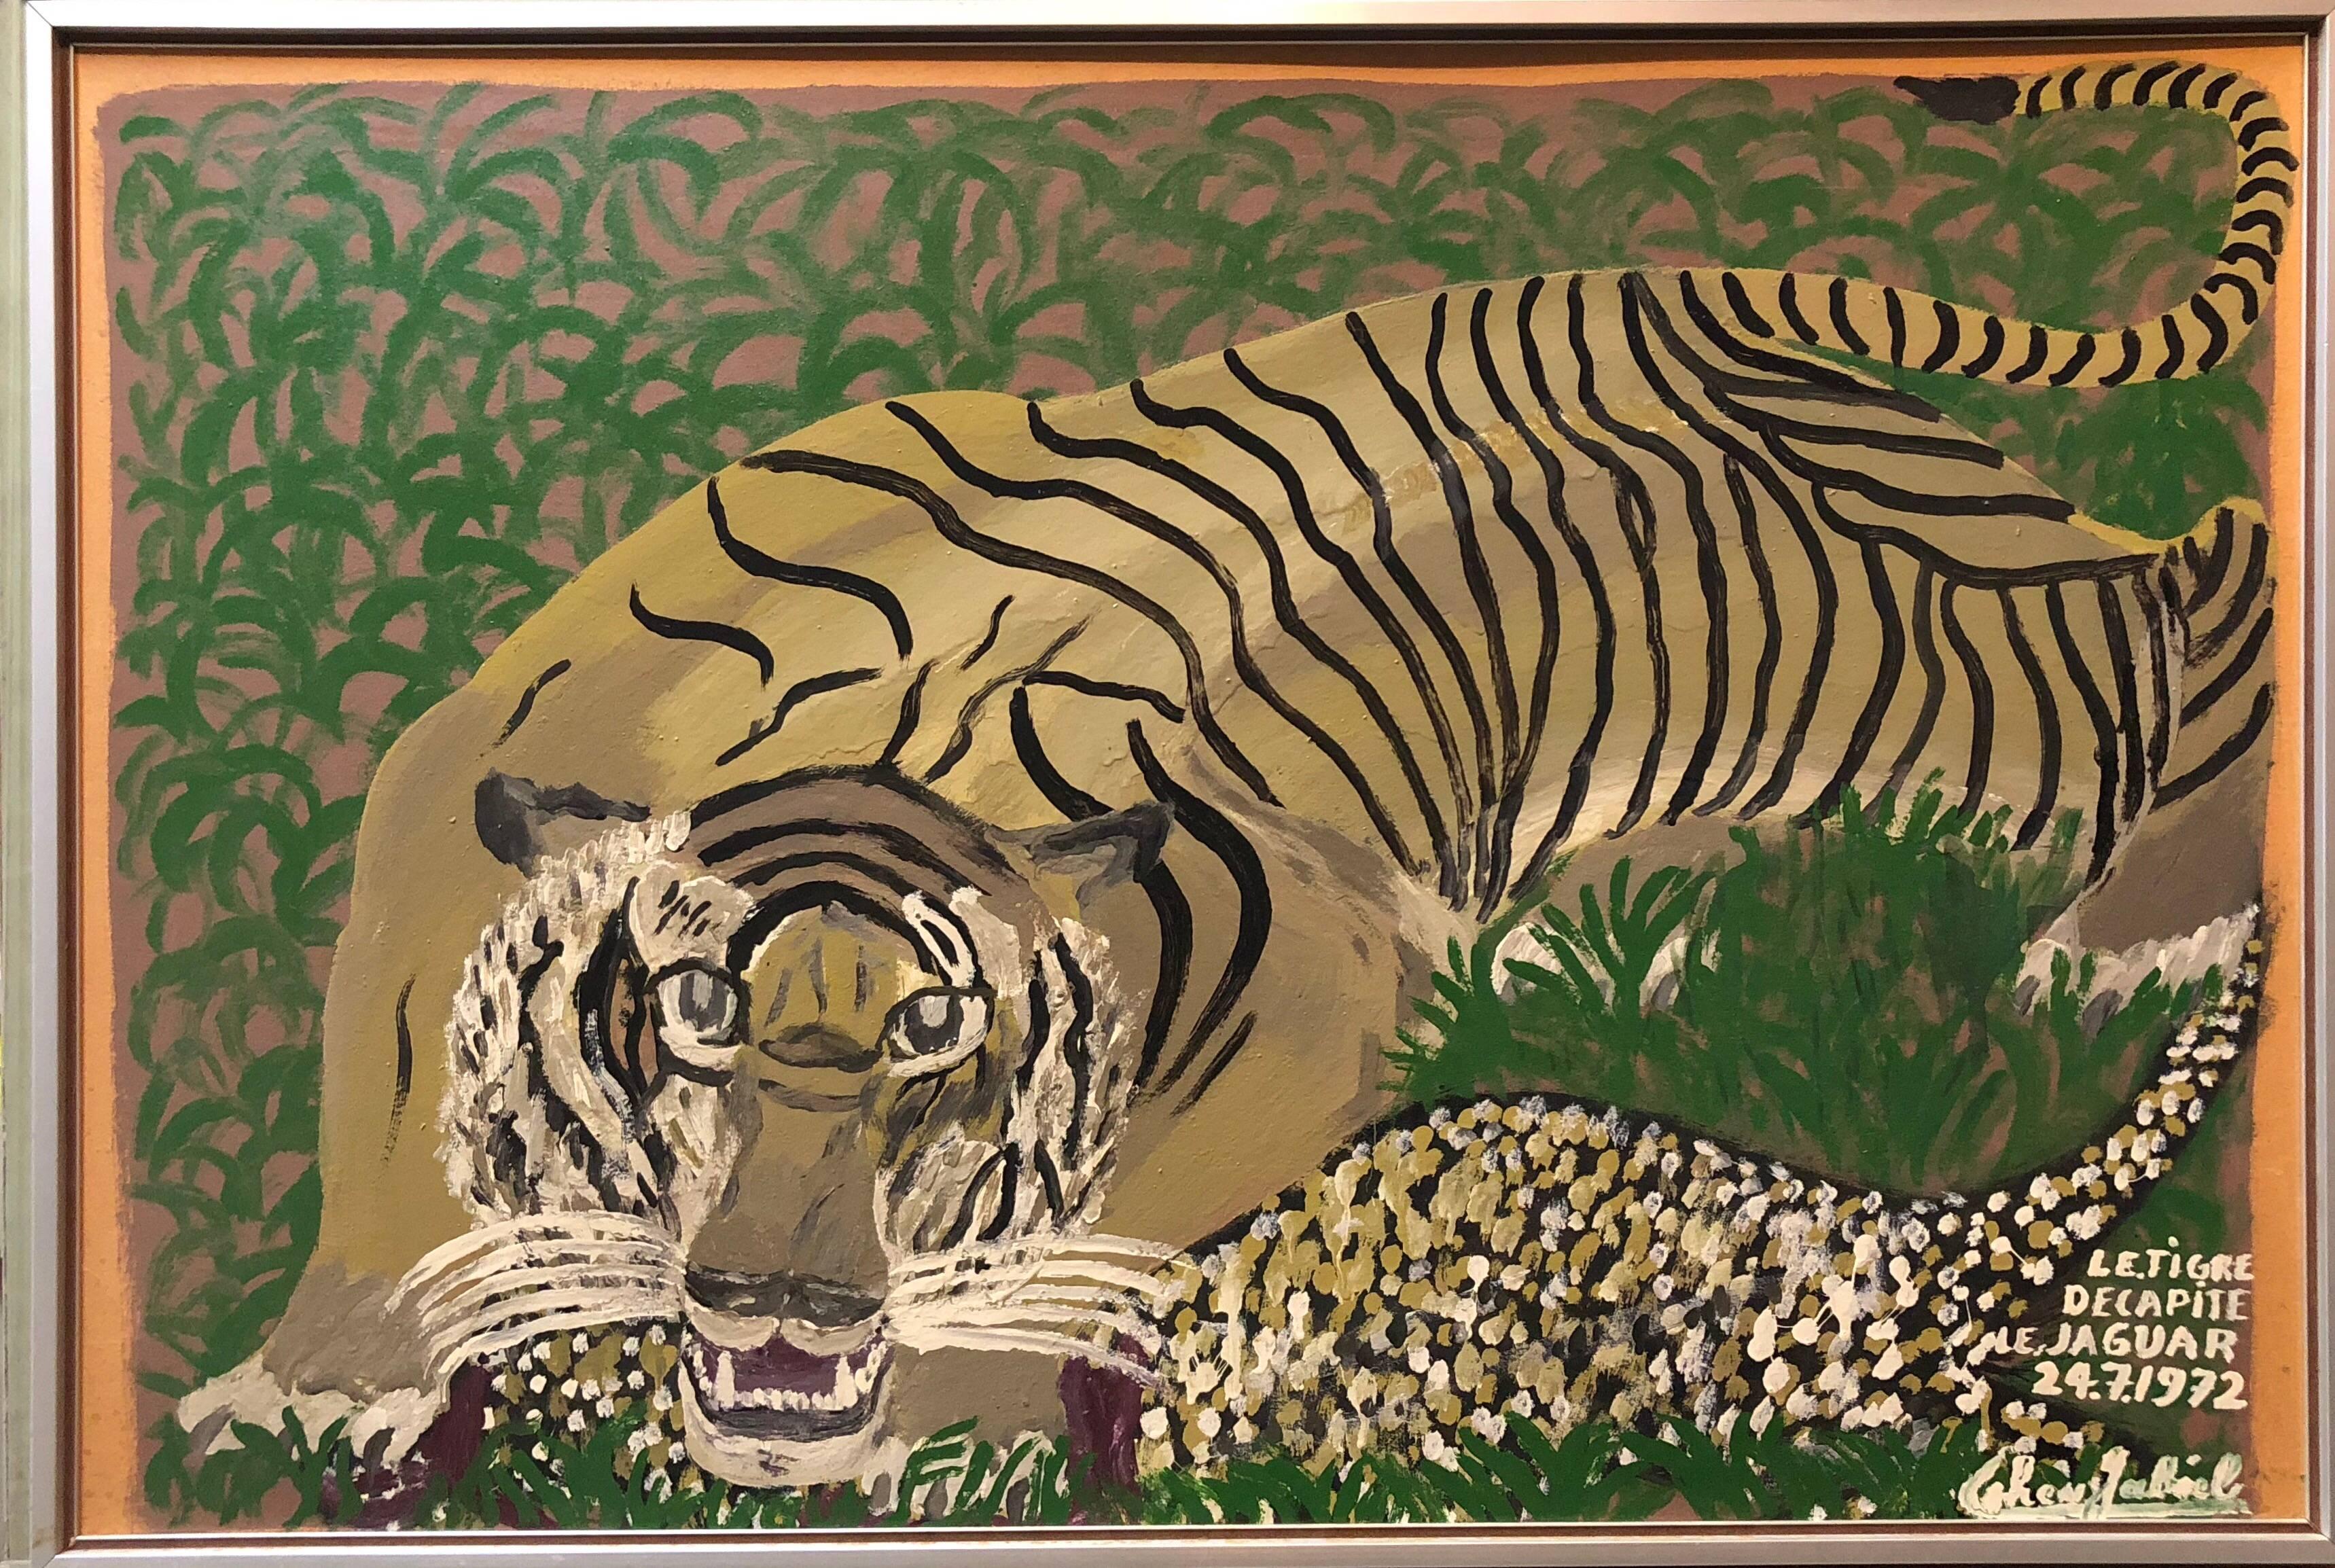 Gabriel Cohen Figurative Painting - Le Tigre Decapite Le Jaguar, Large Wild Animal Israeli Naive Art Oil Painting